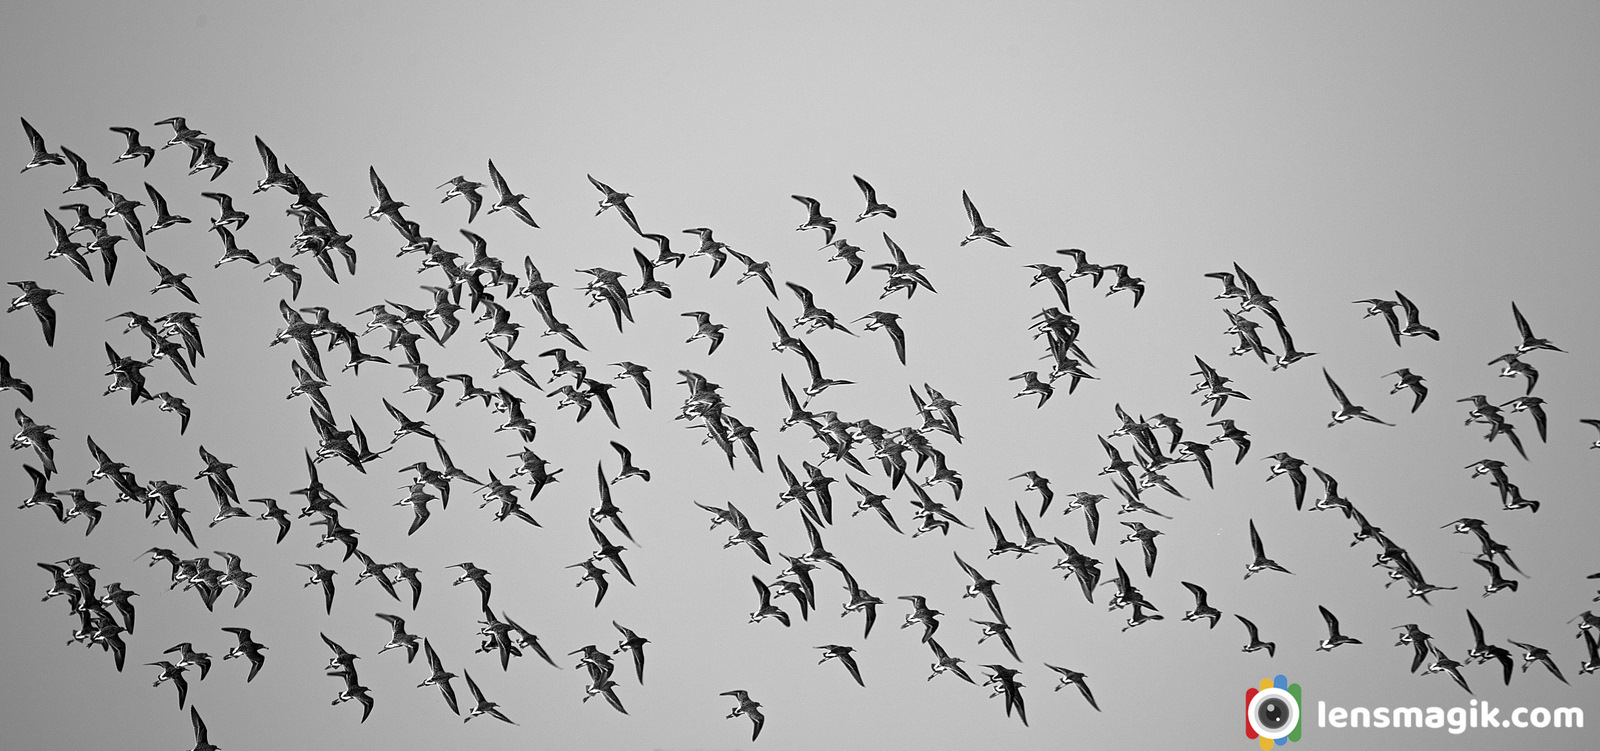 Flock of Birds Black and White